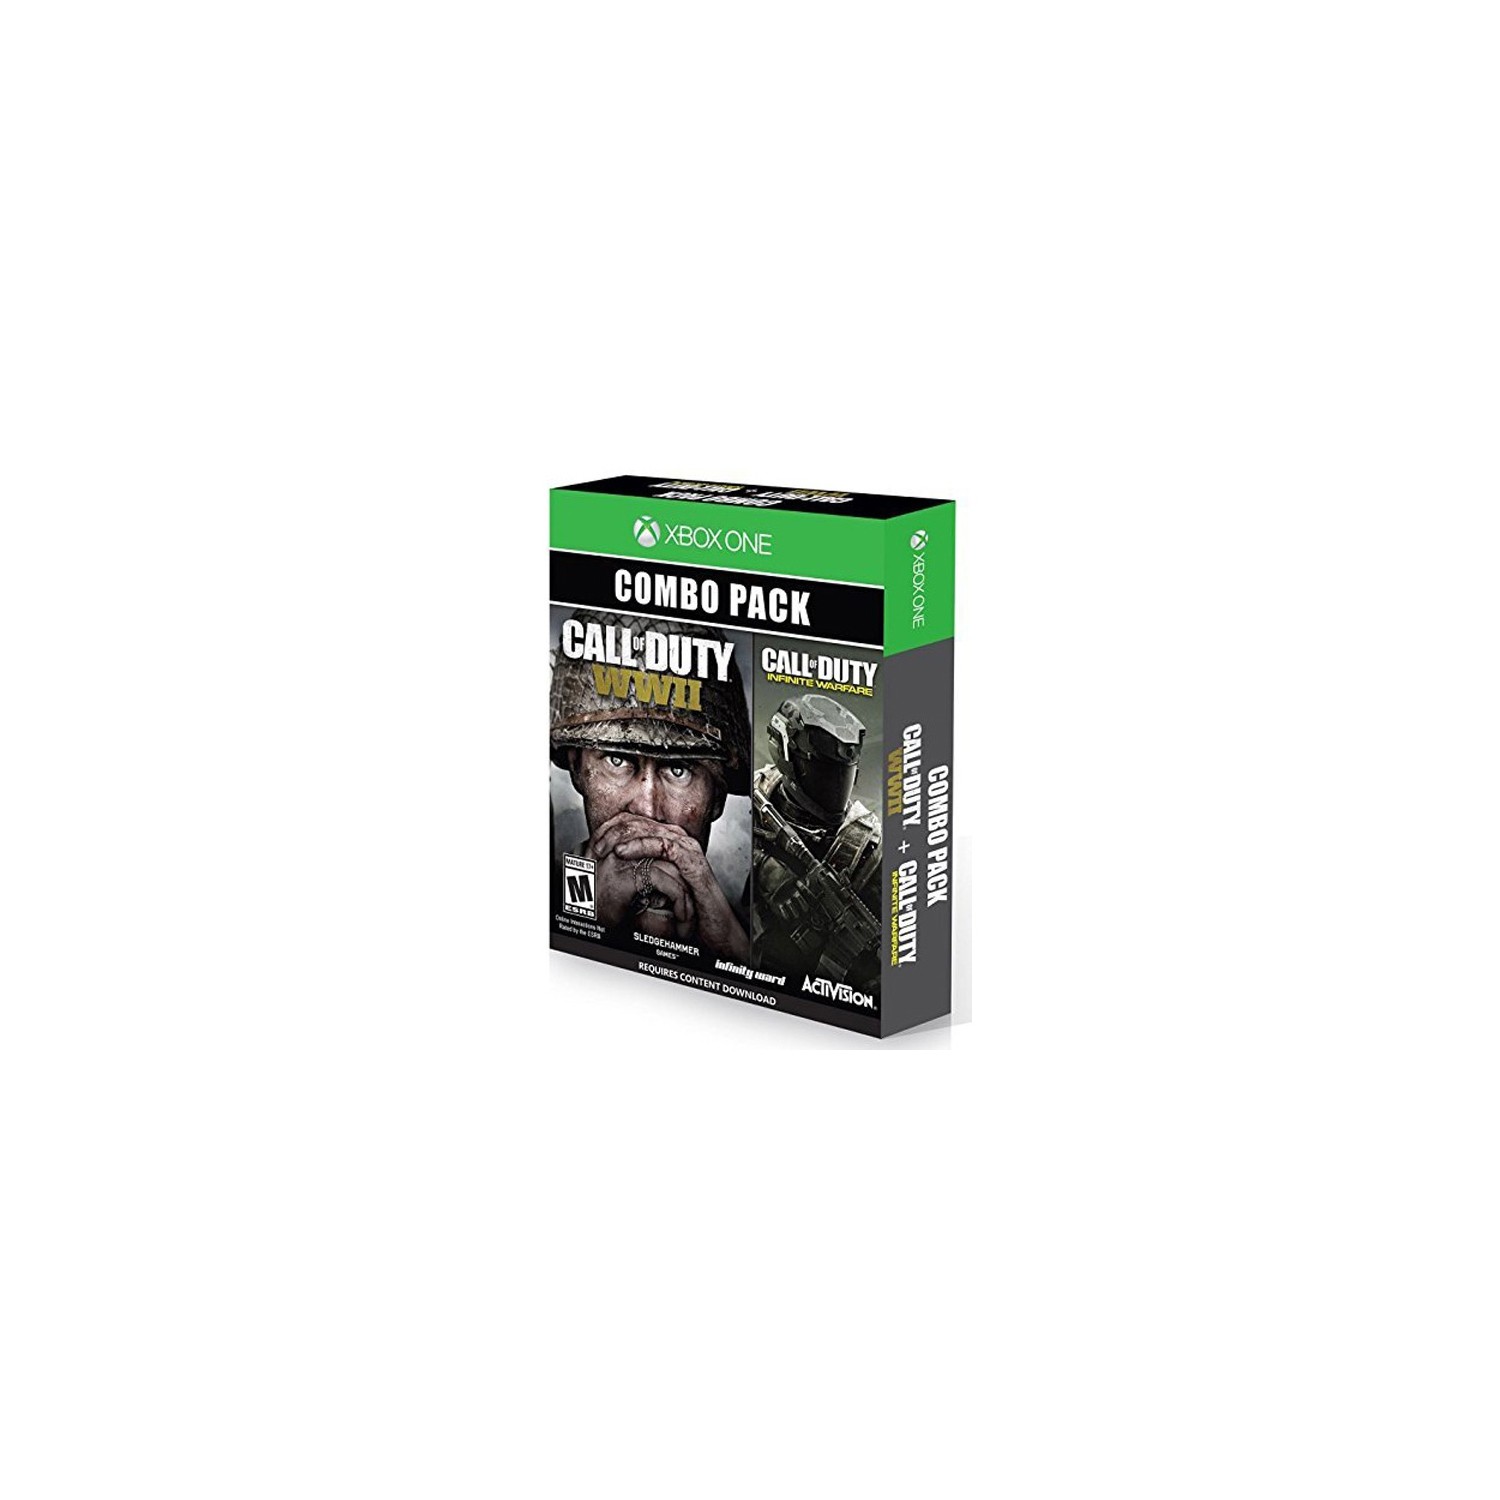 COD Call of Duty WWII & Infinite Warfare Combo Pack (Xbox One)